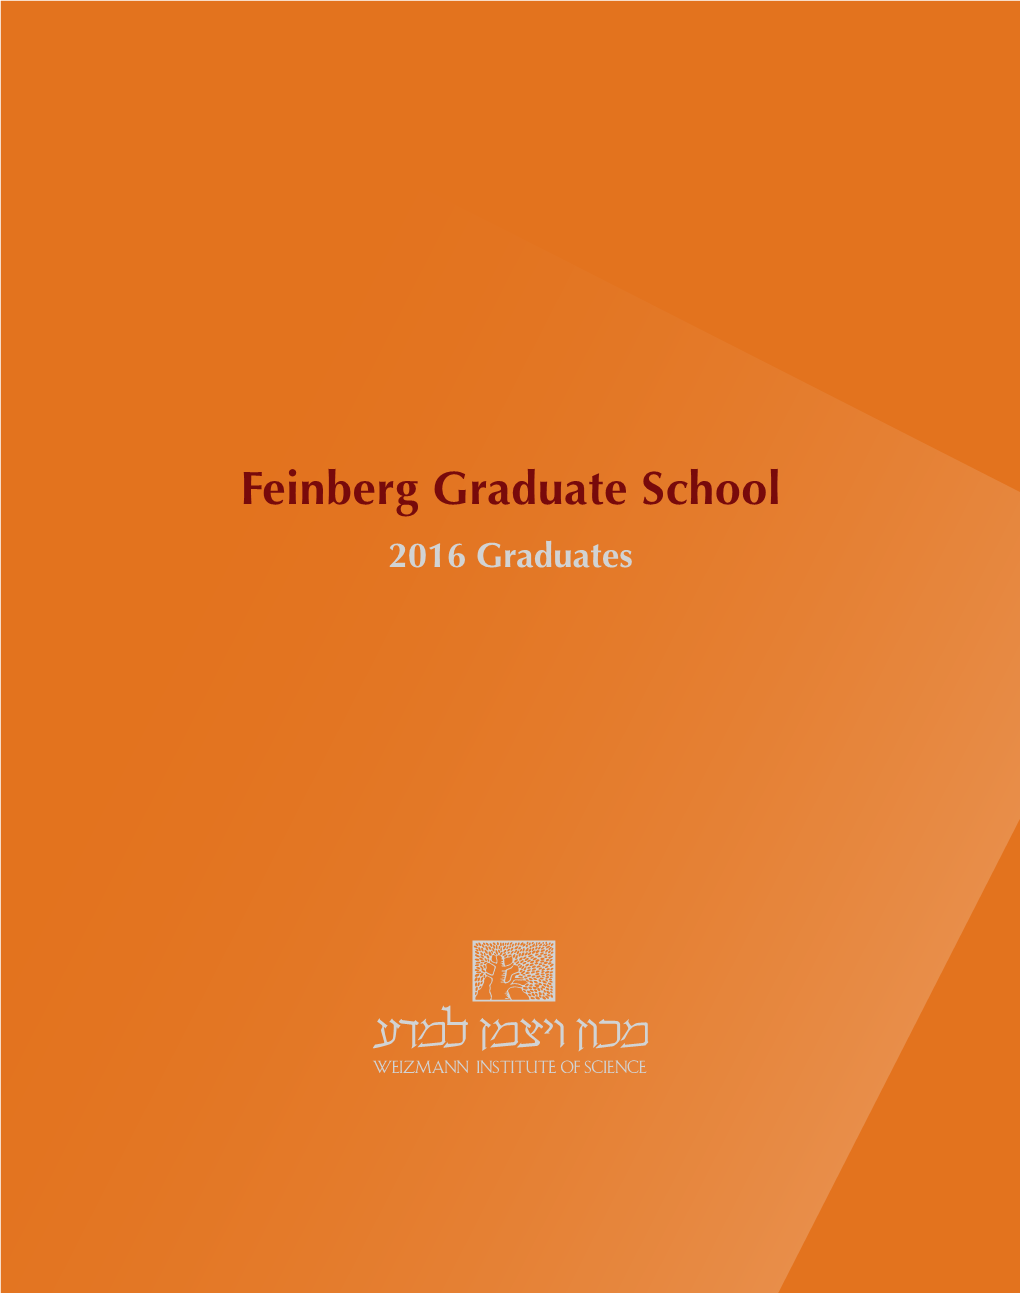 Feinberg Graduate School 2016 Graduates Feinberg Graduate School Weizmann Institute of Science P.O